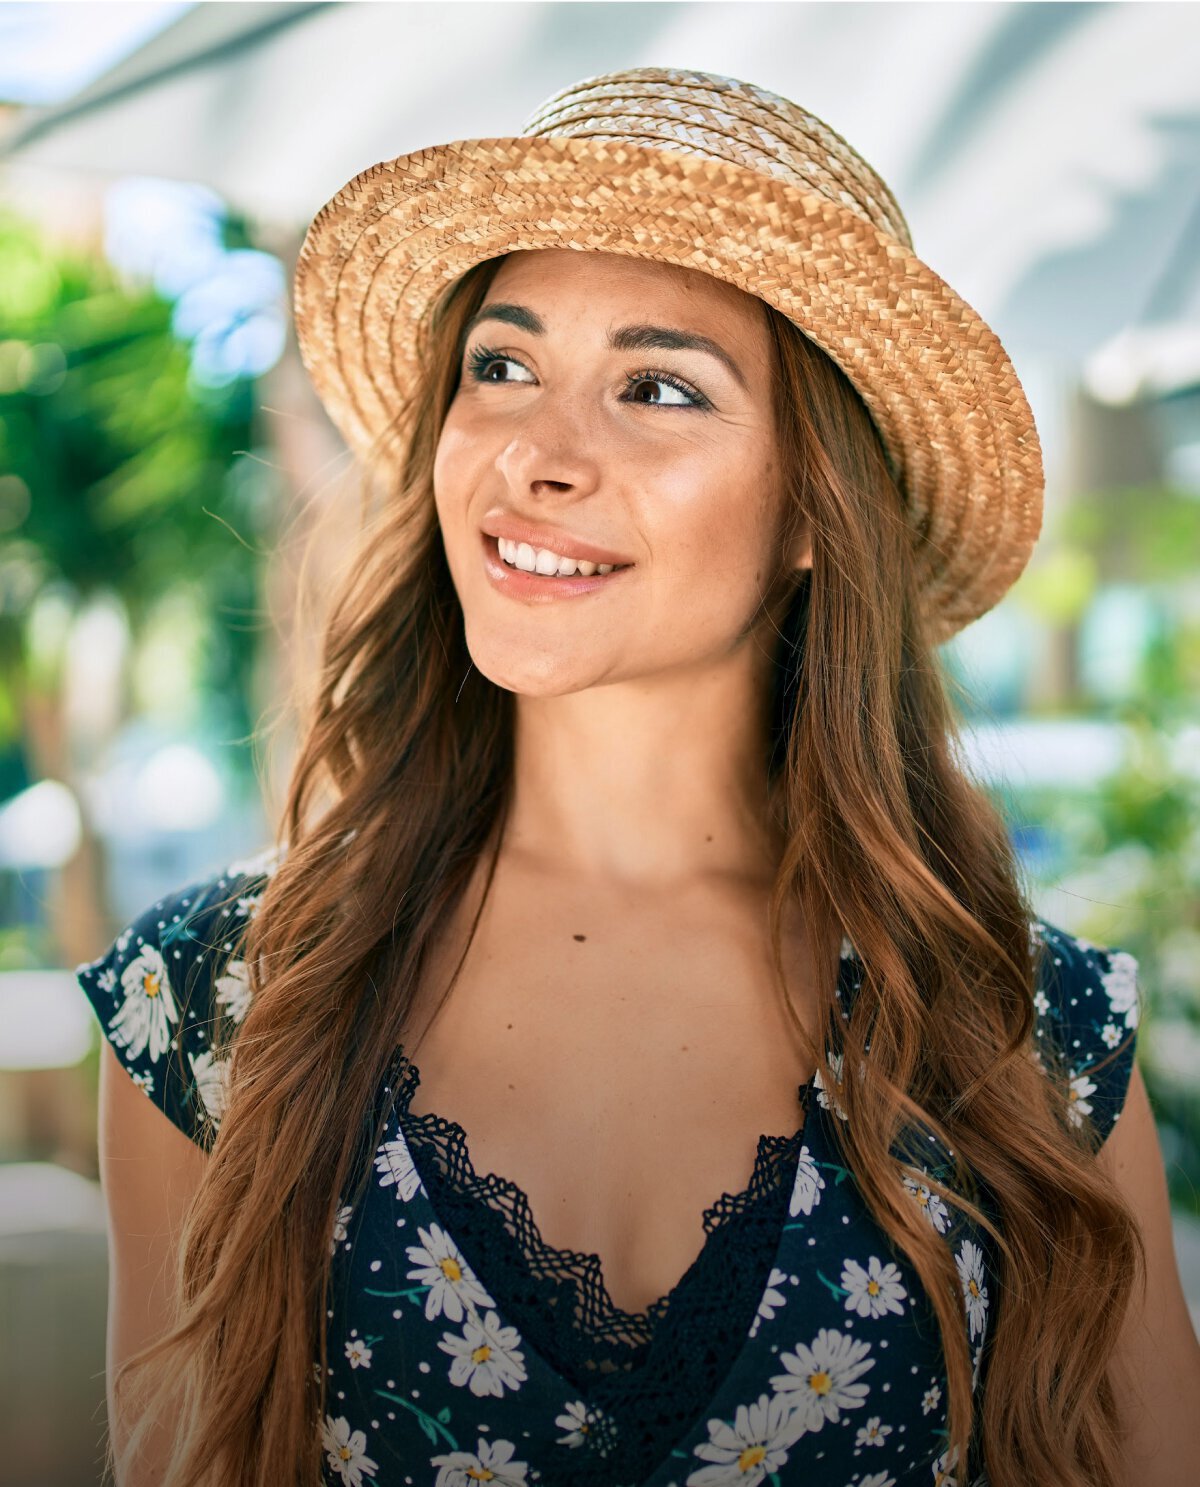 Beautiful woman outdoors wearing hat